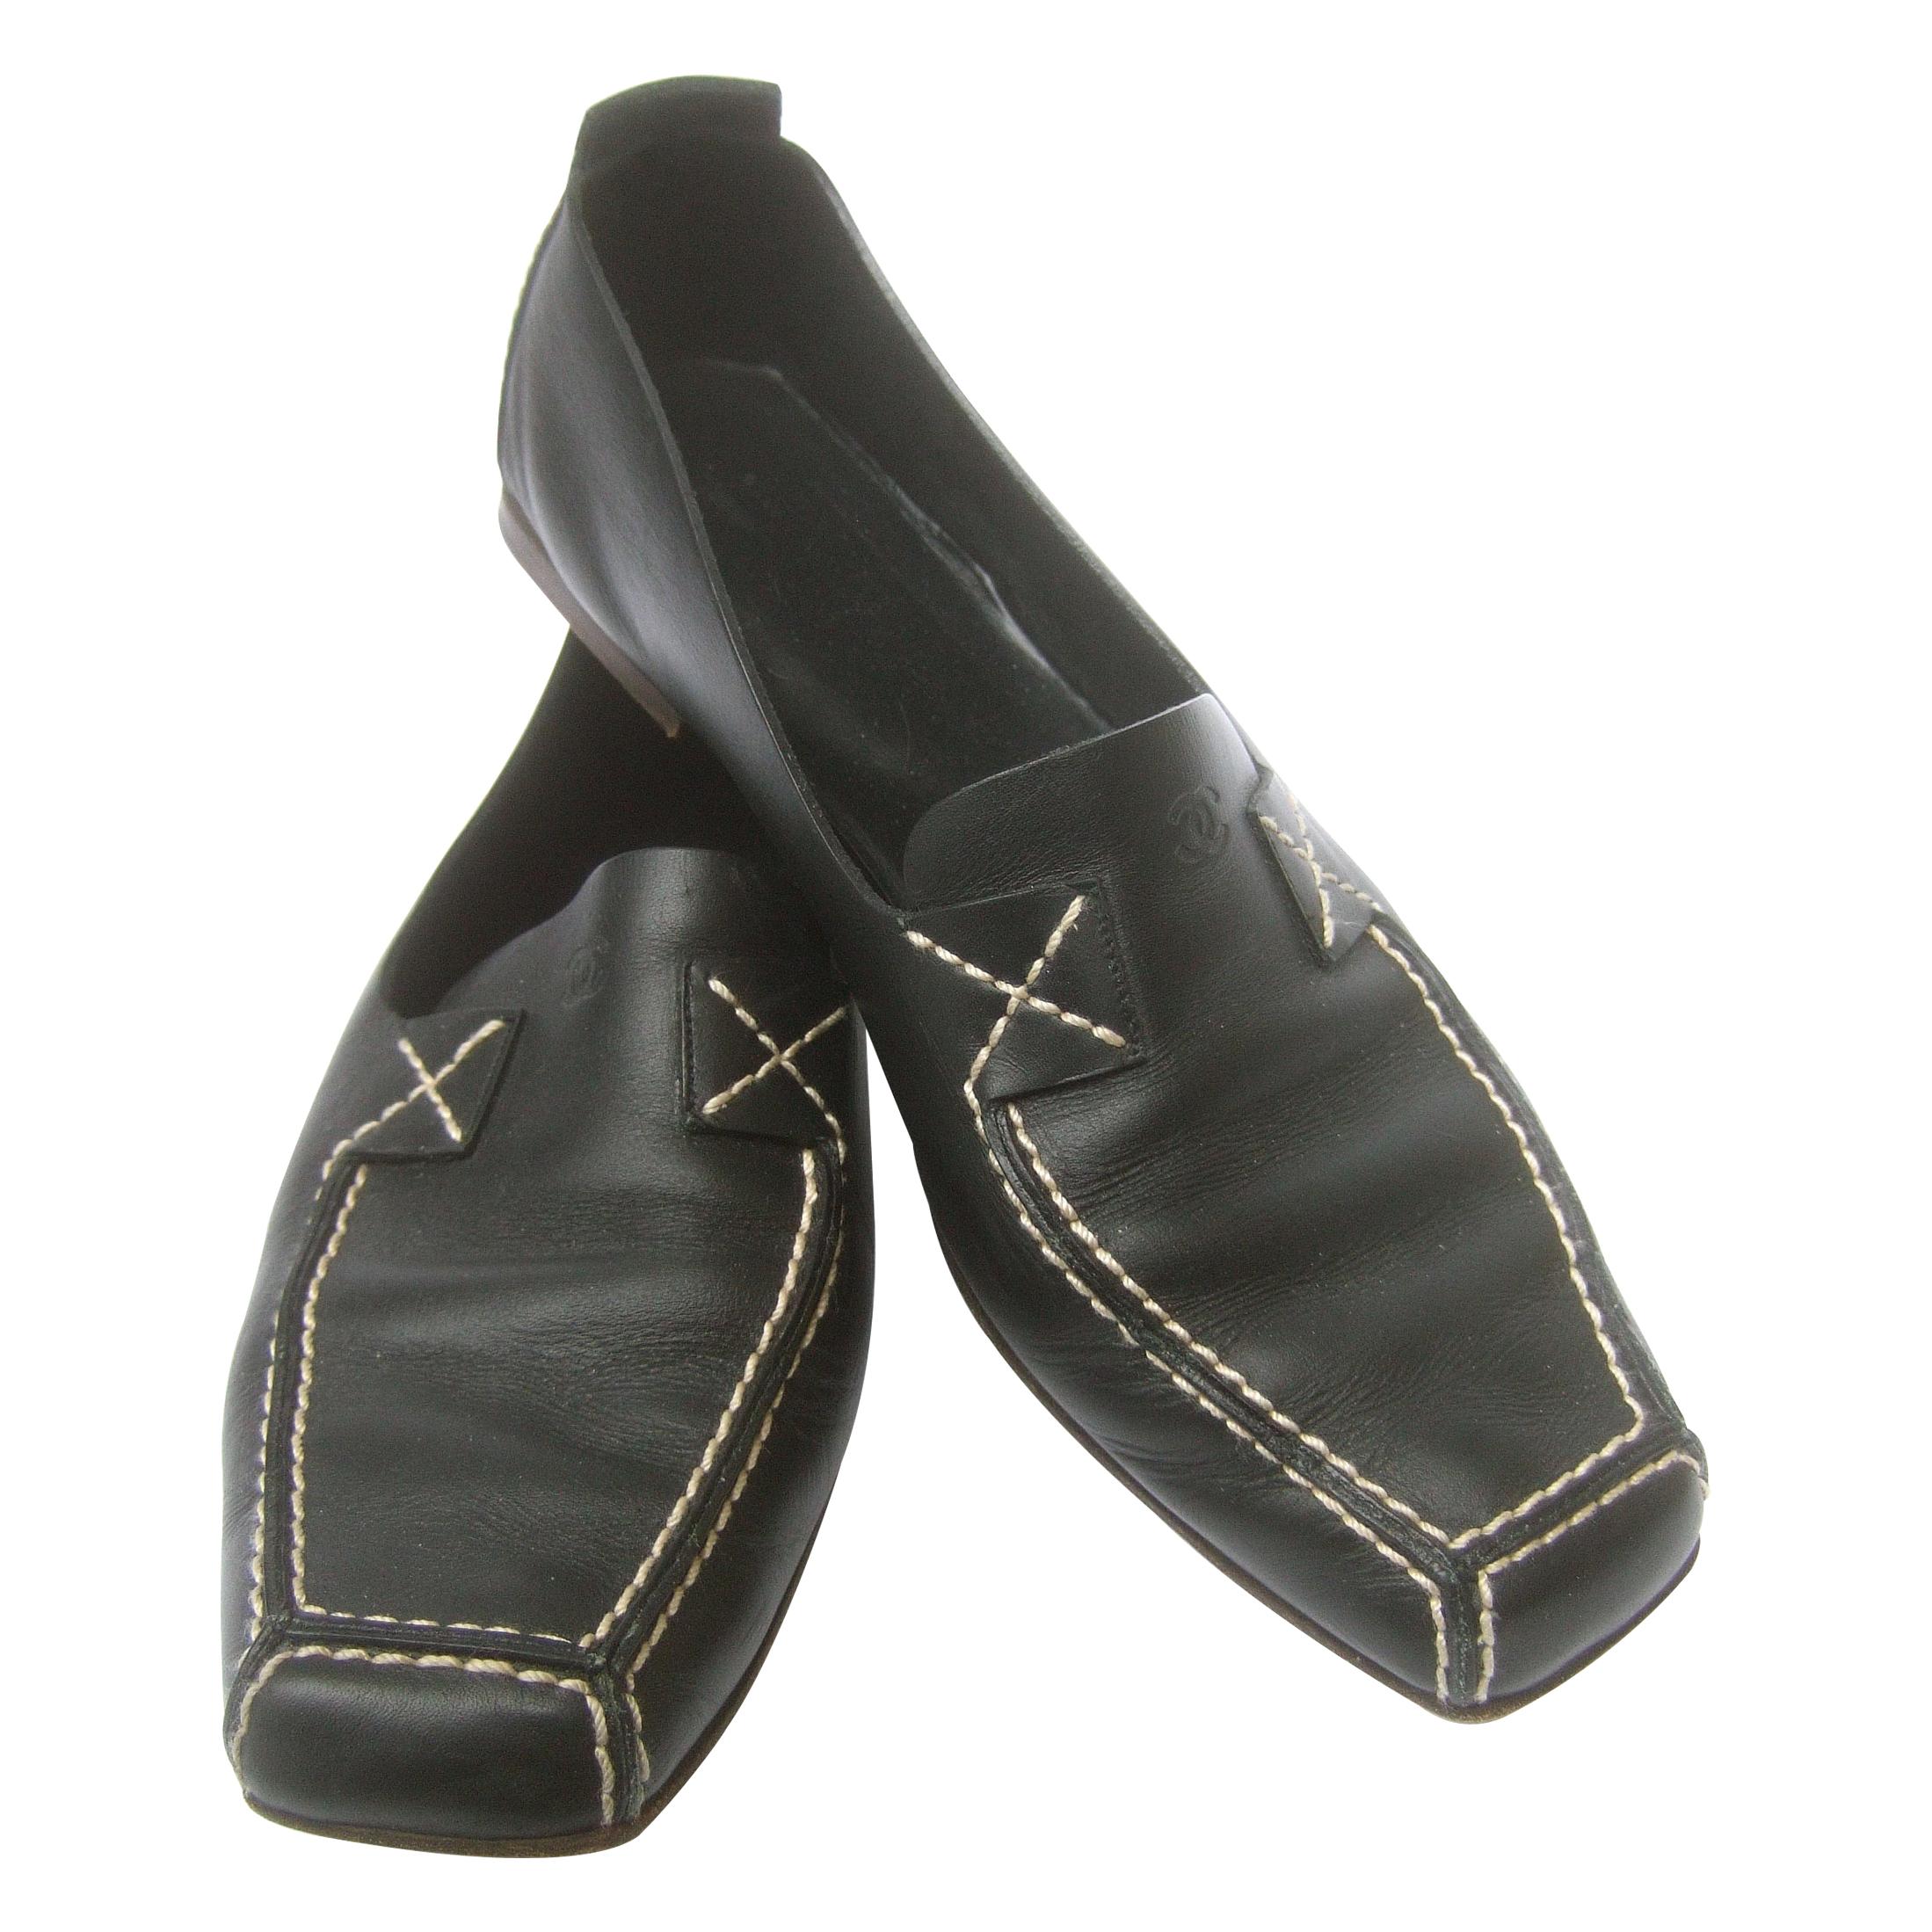 Chanel Black Leather Slip On Italian Low Heel Flats Size 38.5 c 1990s